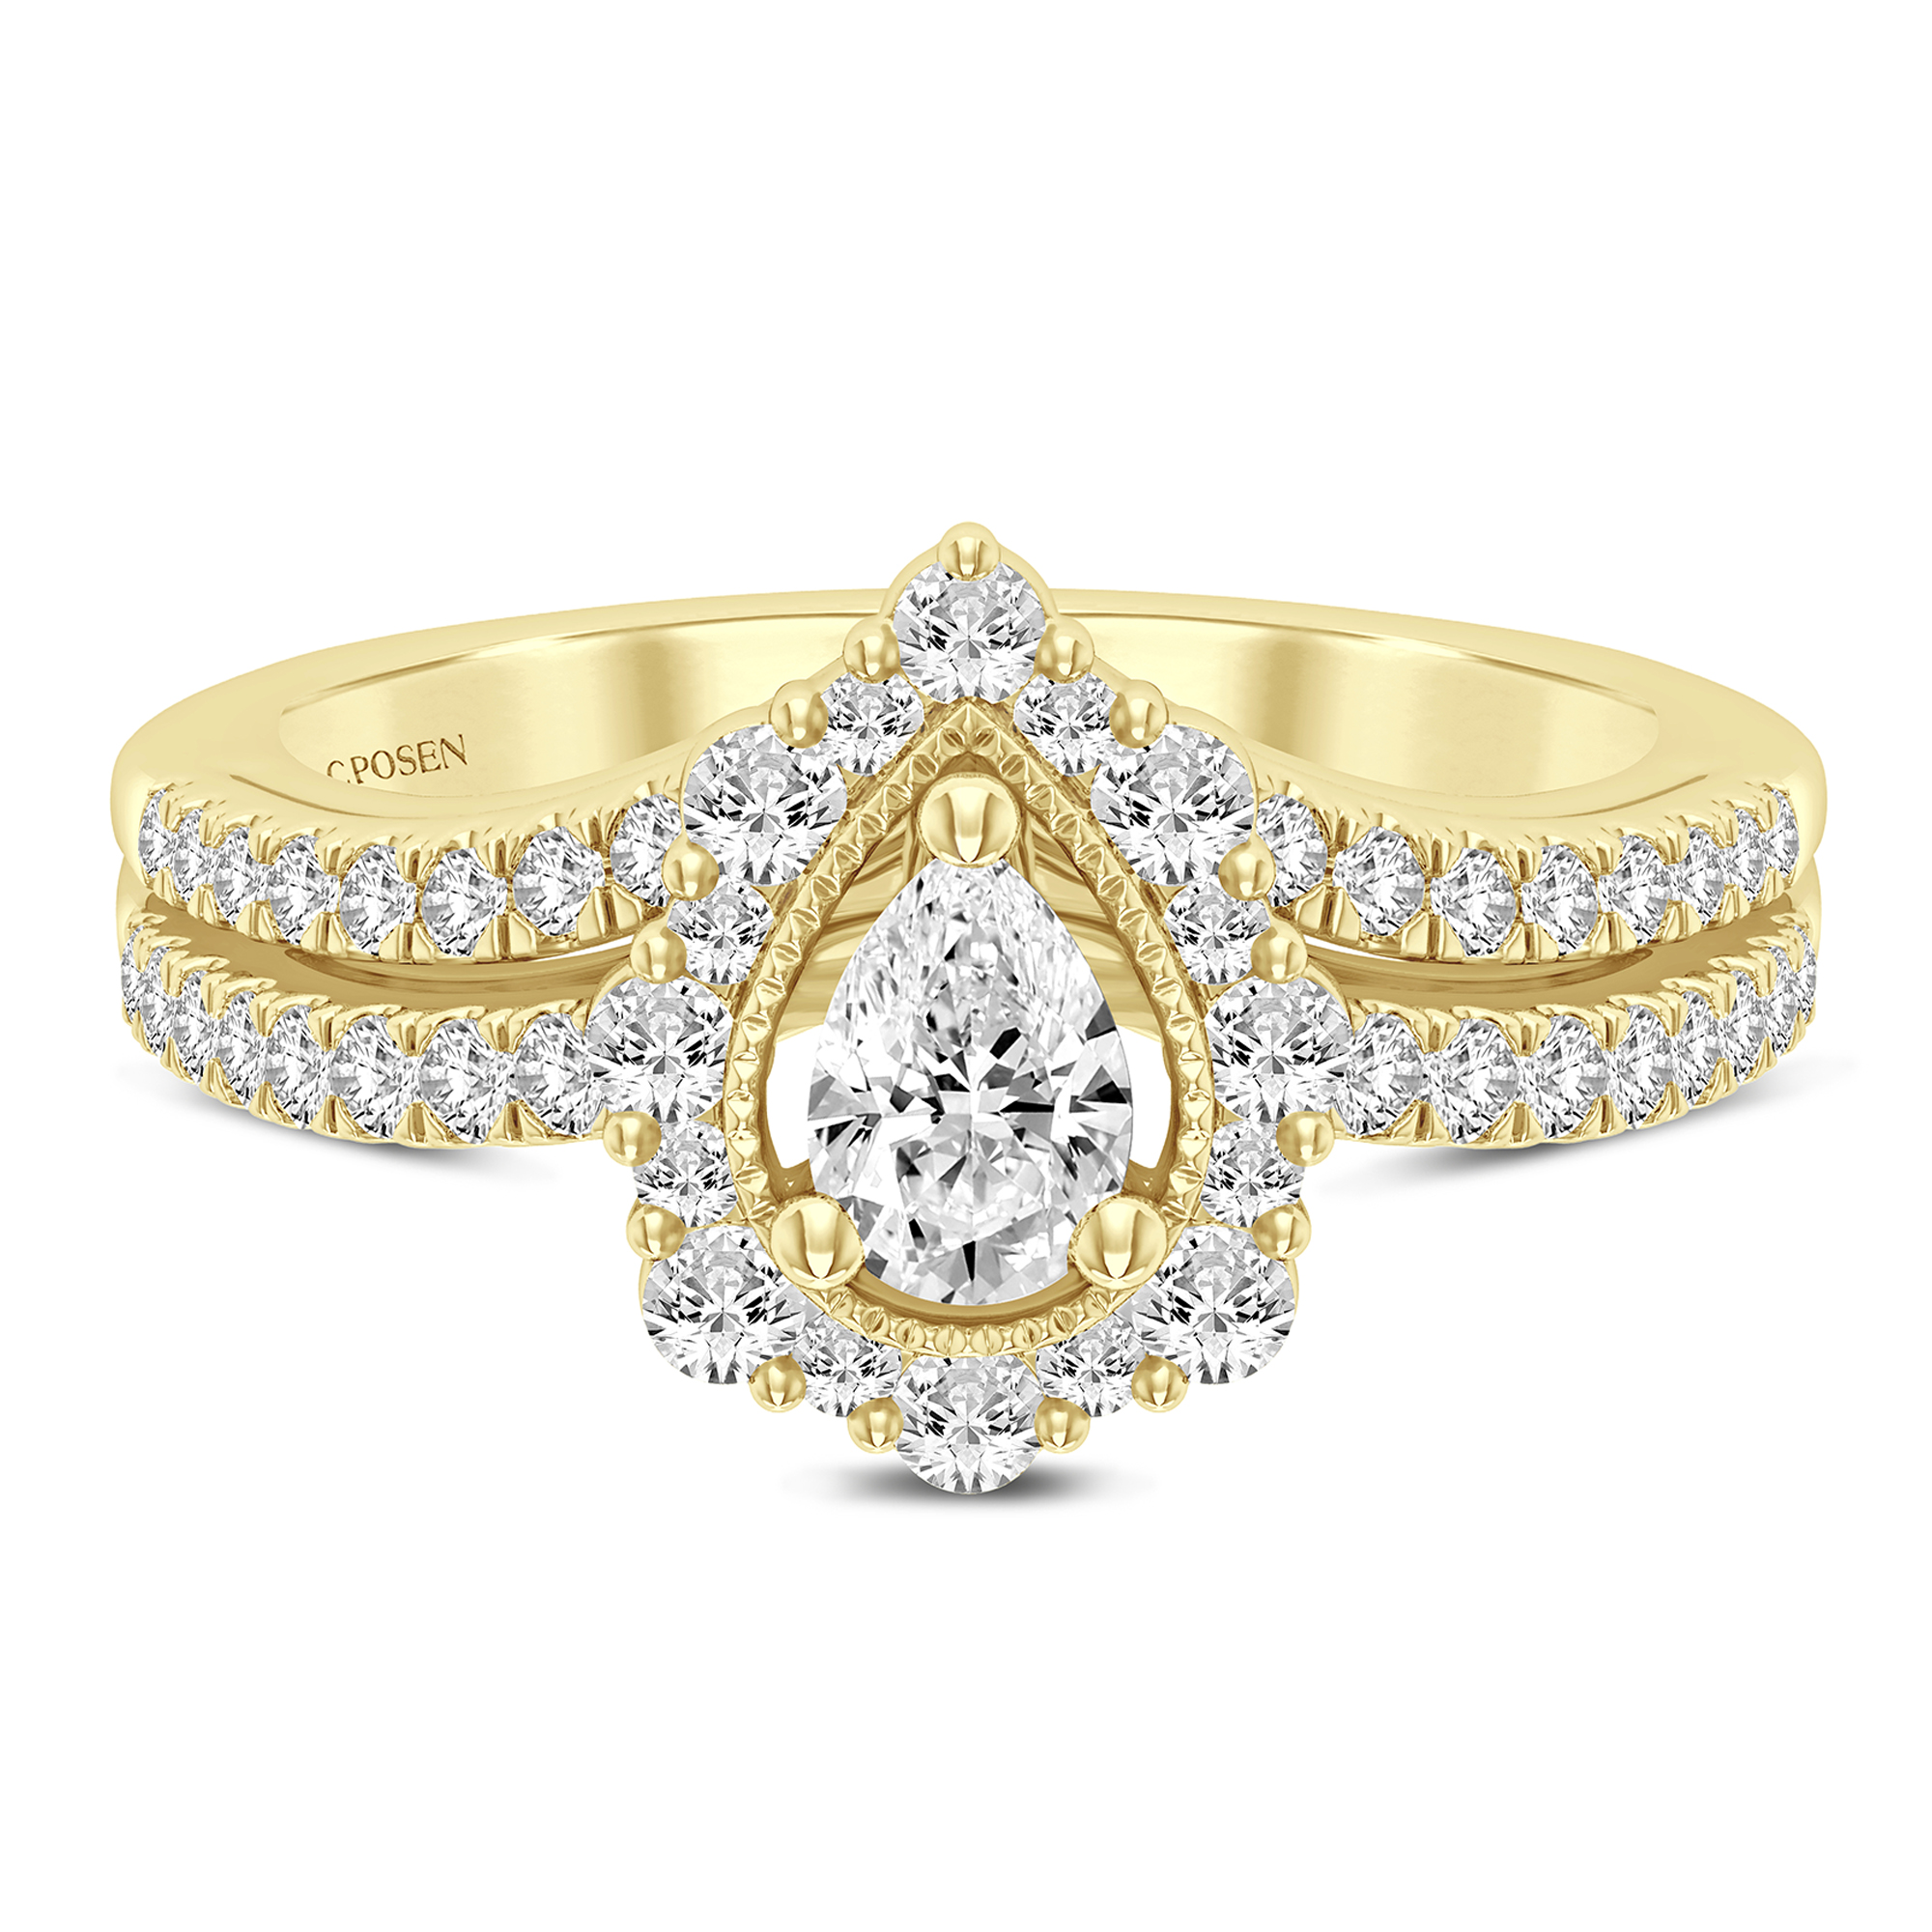 Zac Posen Priscilla Black and White Diamond Engagement Ring